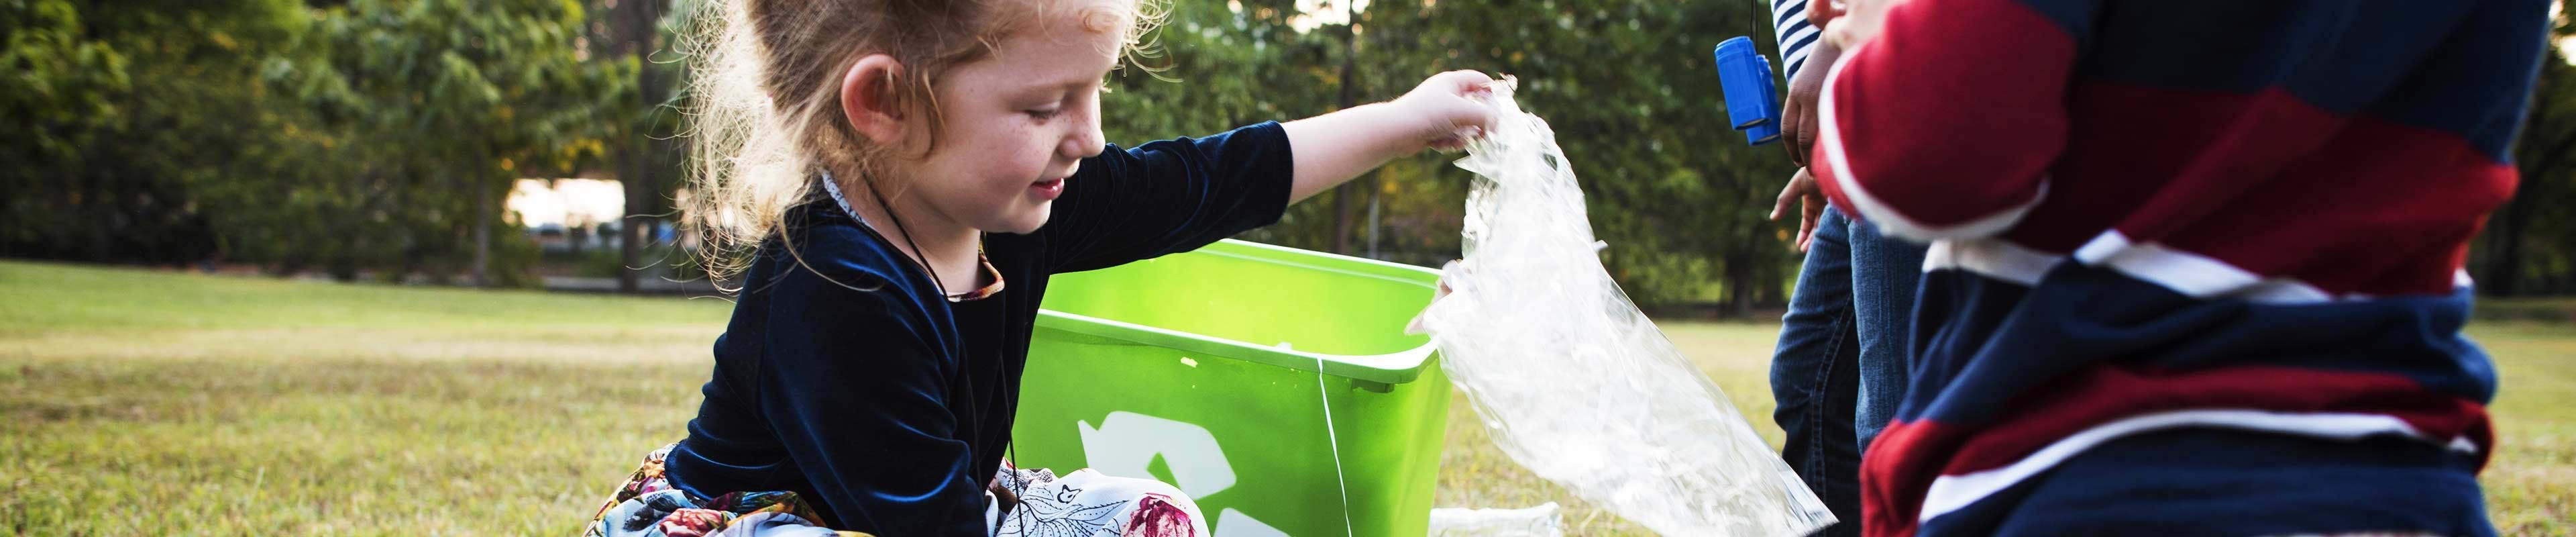 A little blonde white girl wearing a blue velvet dress sorts plastic trash on a lawn into a green recycling bin.